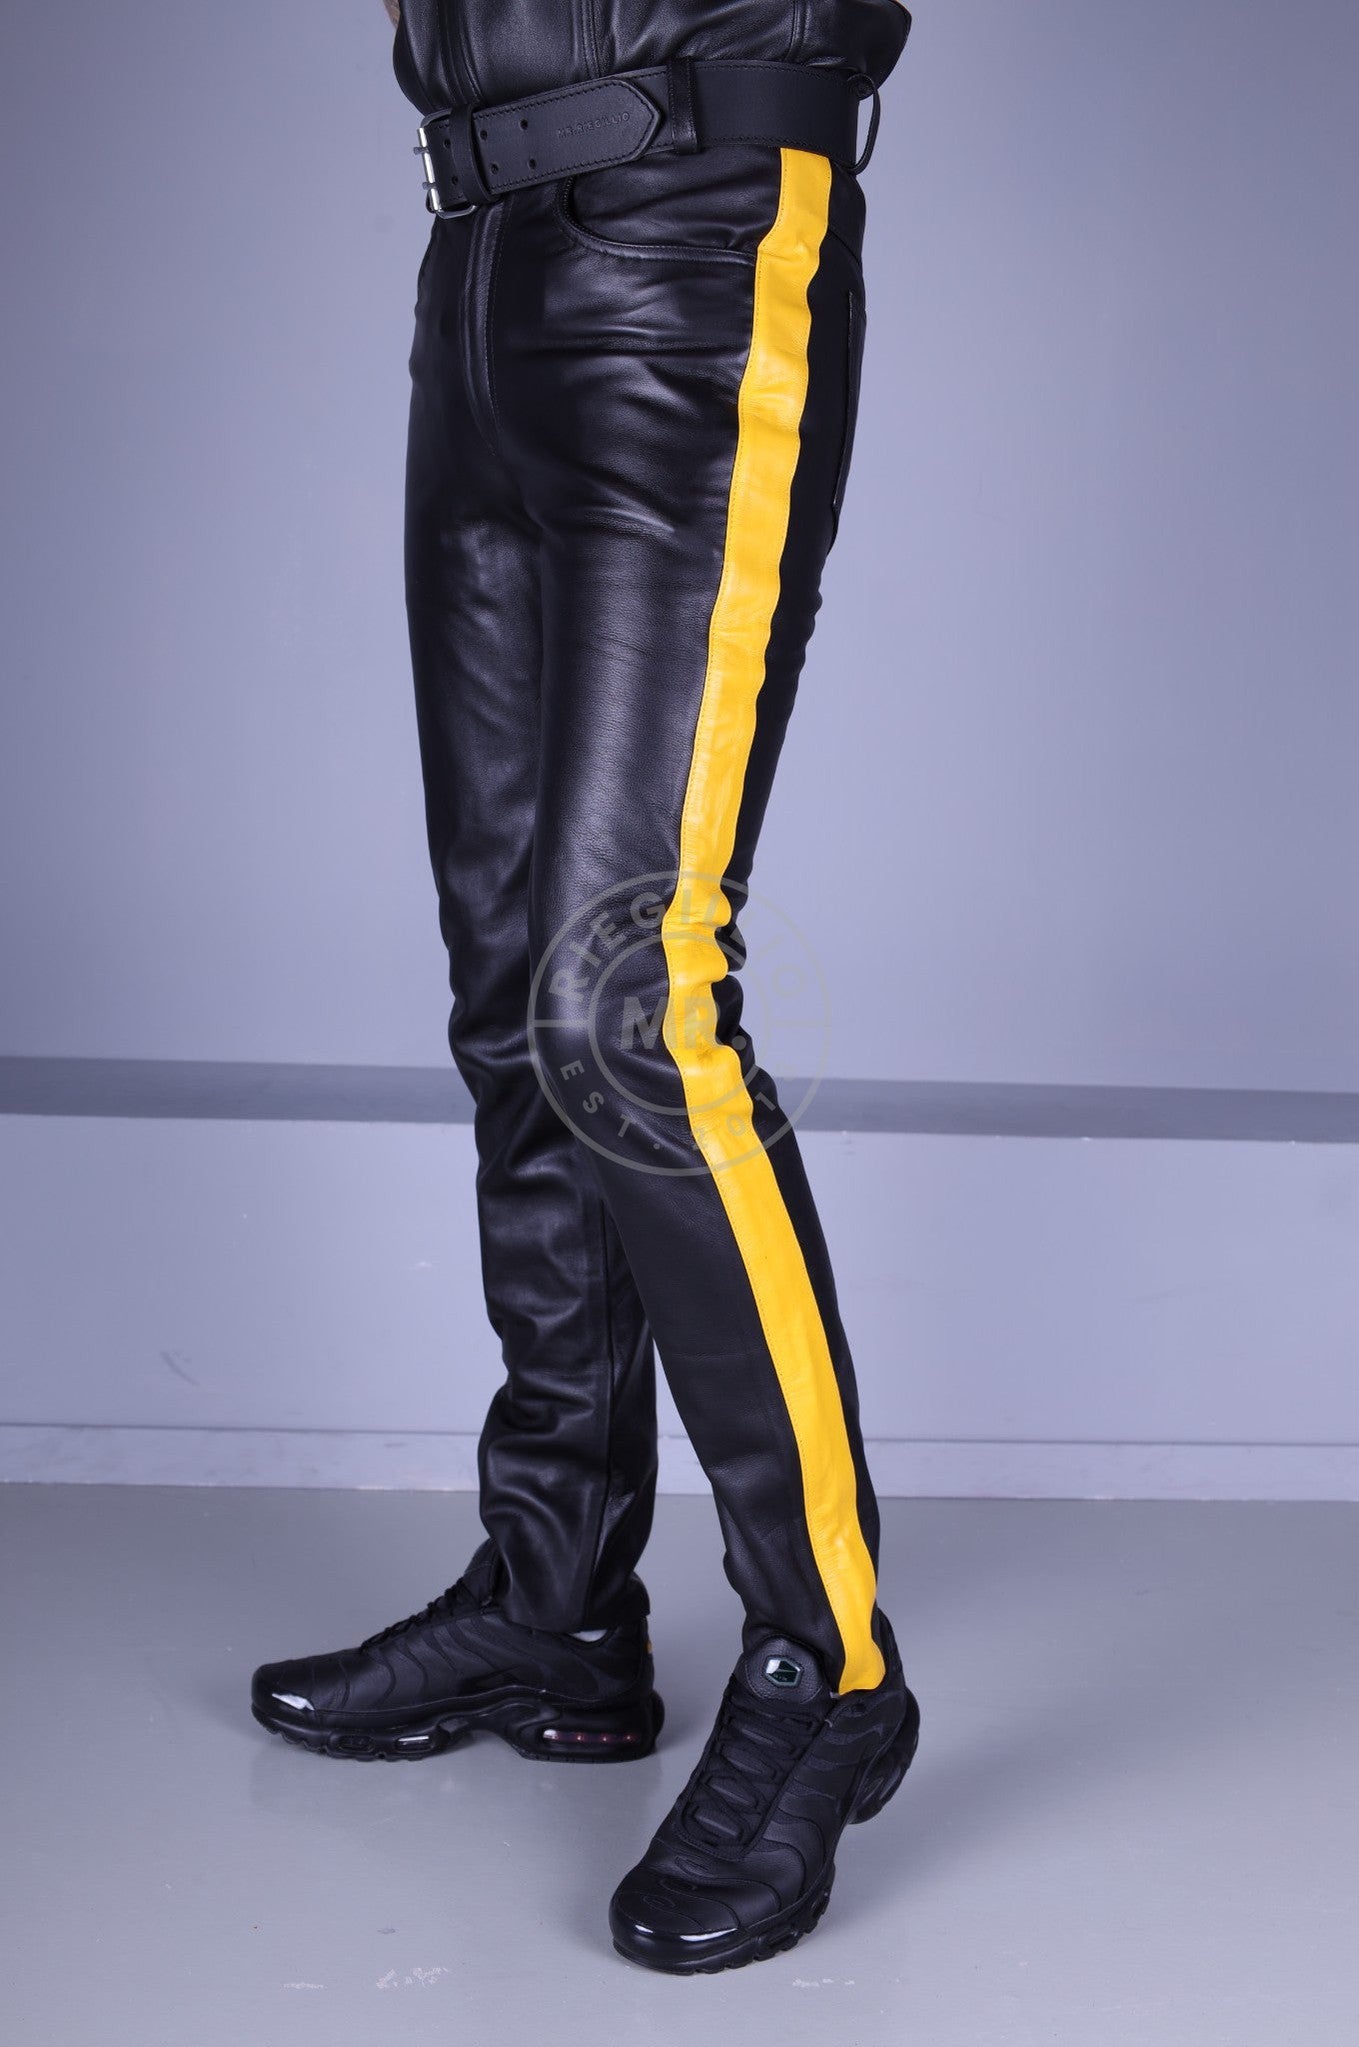 Black Leather 5 Pocket Pants - Yellow Stripe at MR. Riegillio